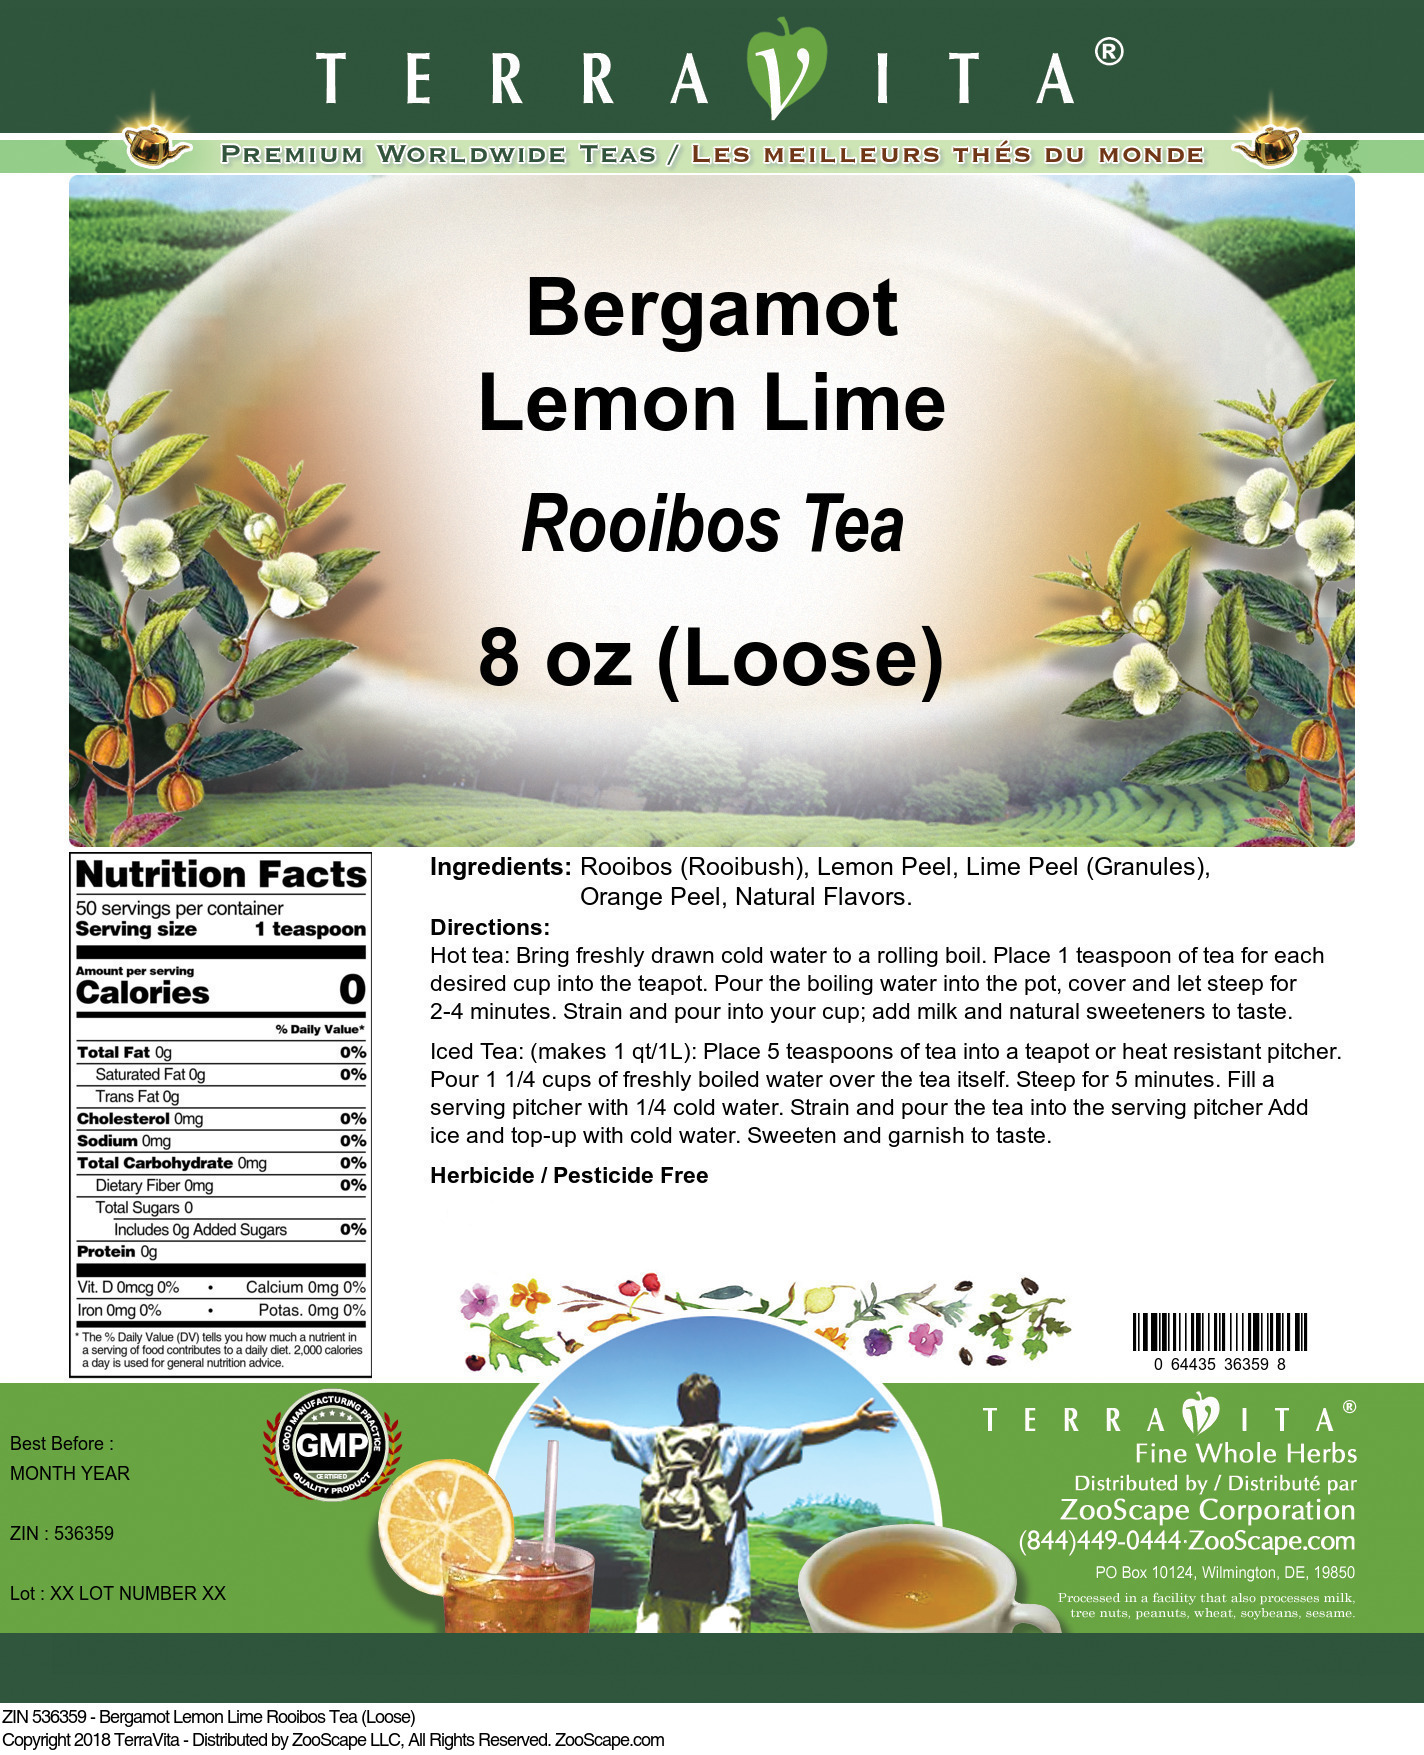 Bergamot Lemon Lime Rooibos Tea (Loose) - Label